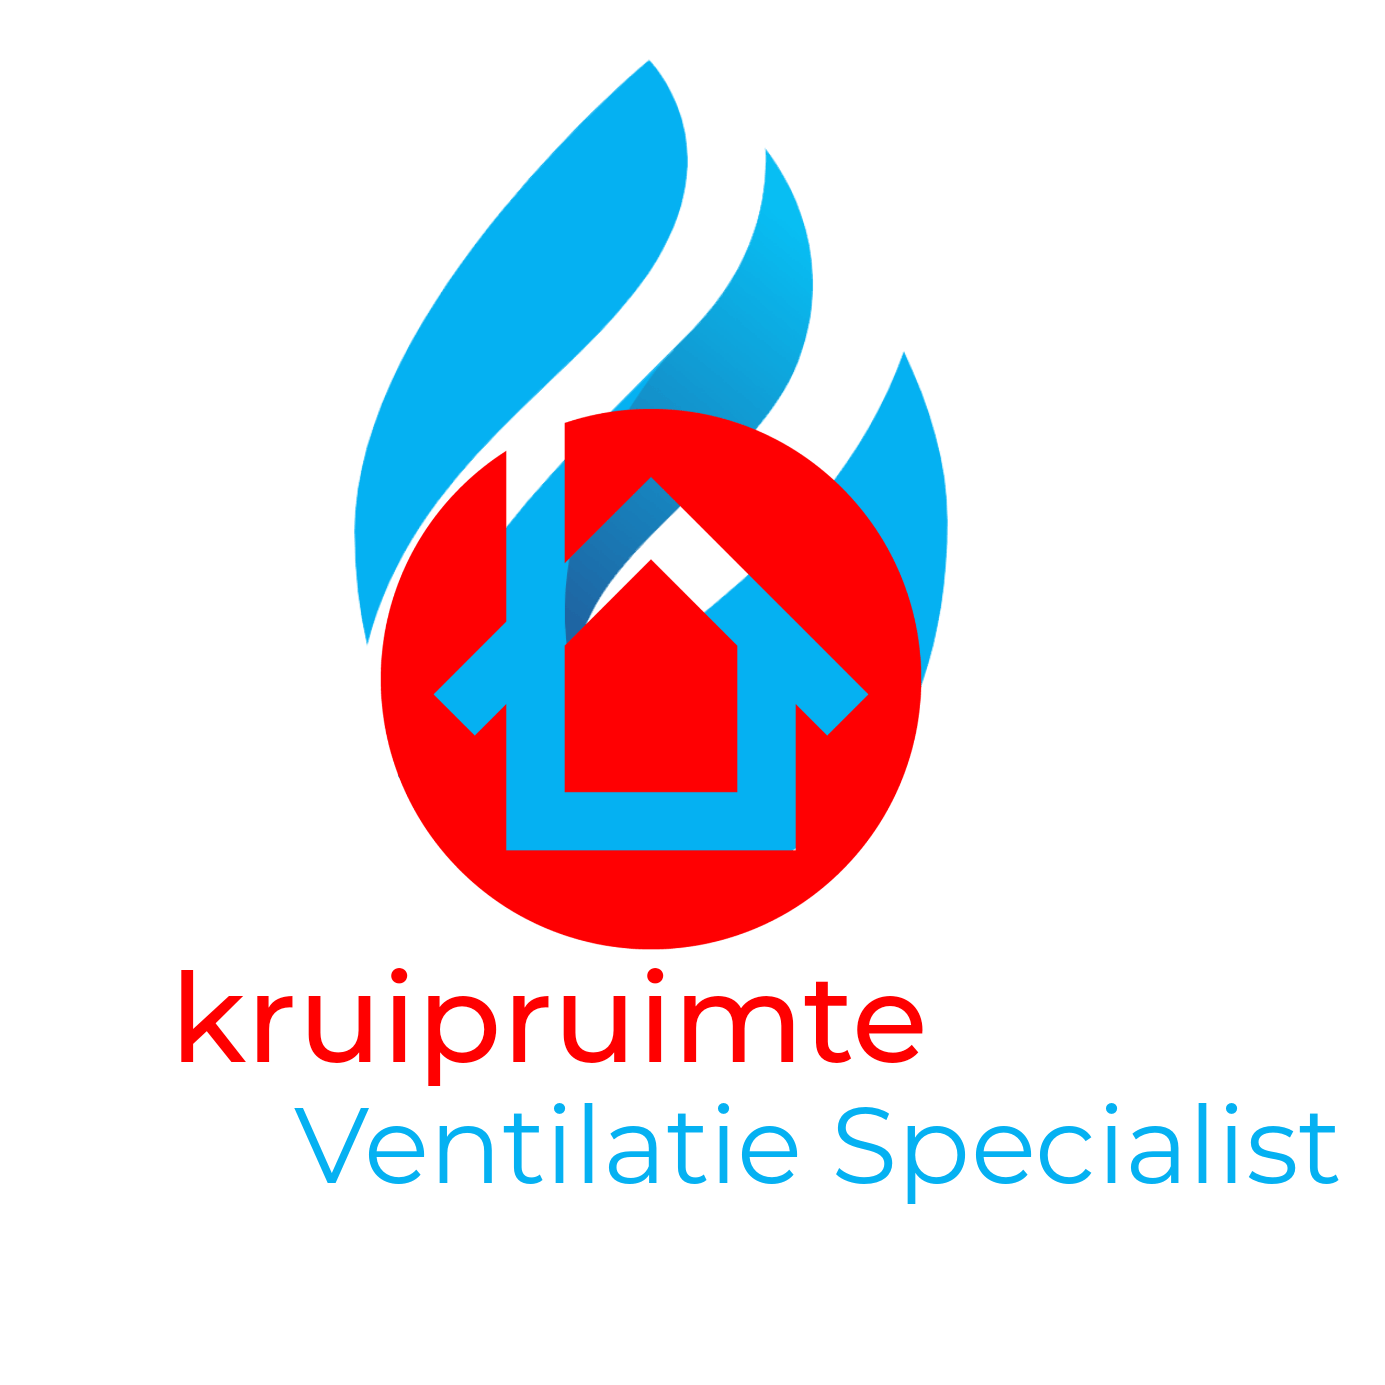 Kruipruimte ventilatie specialist official logo